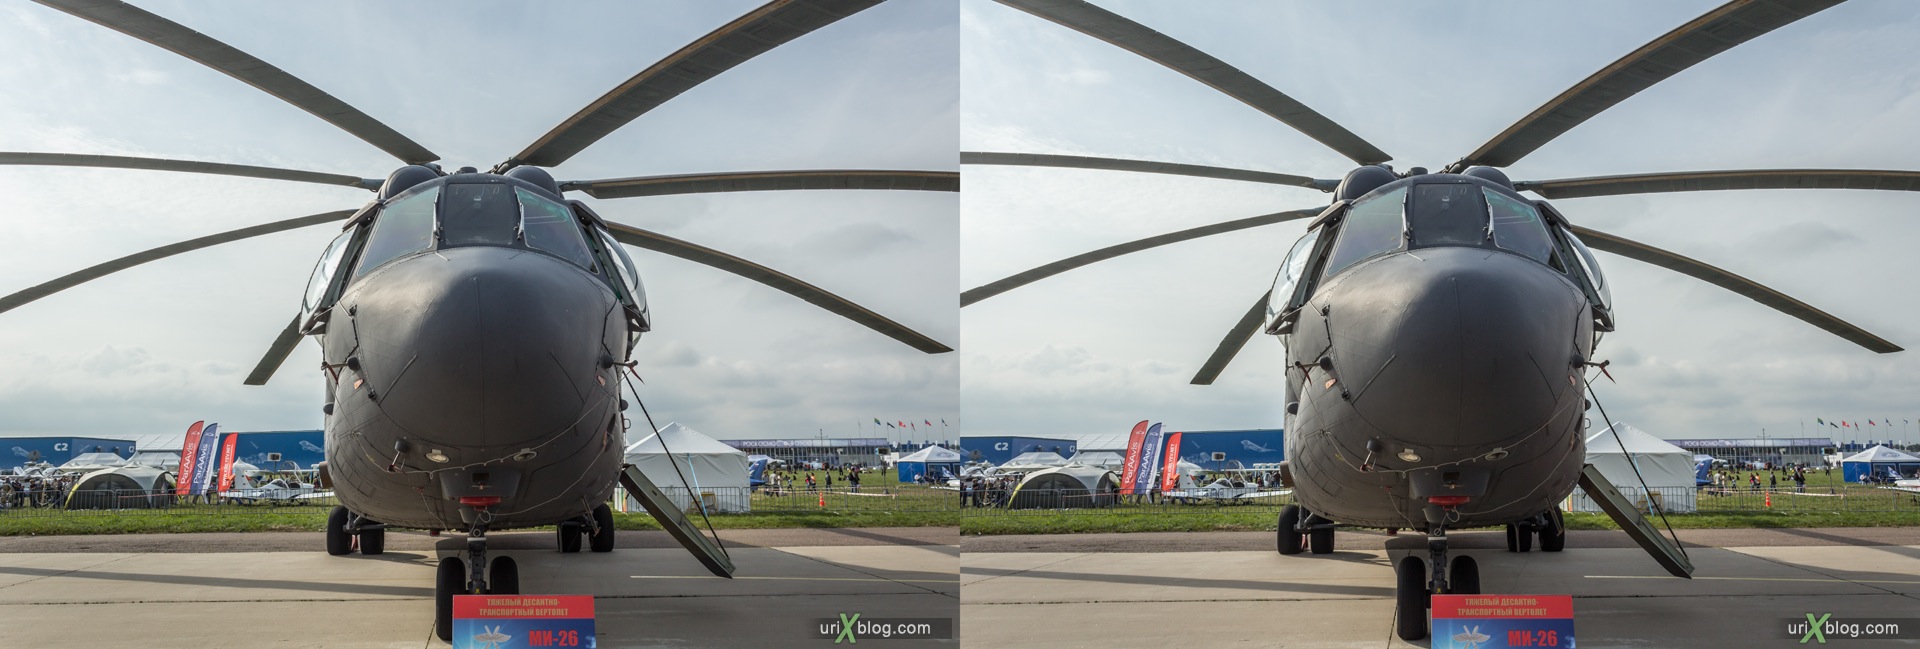 2013, MAKS, International Aviation and Space Salon, Russia, Ramenskoye airfield, Mi-26, helicopter, 3D, stereo pair, cross-eyed, crossview, cross view stereo pair, stereoscopic